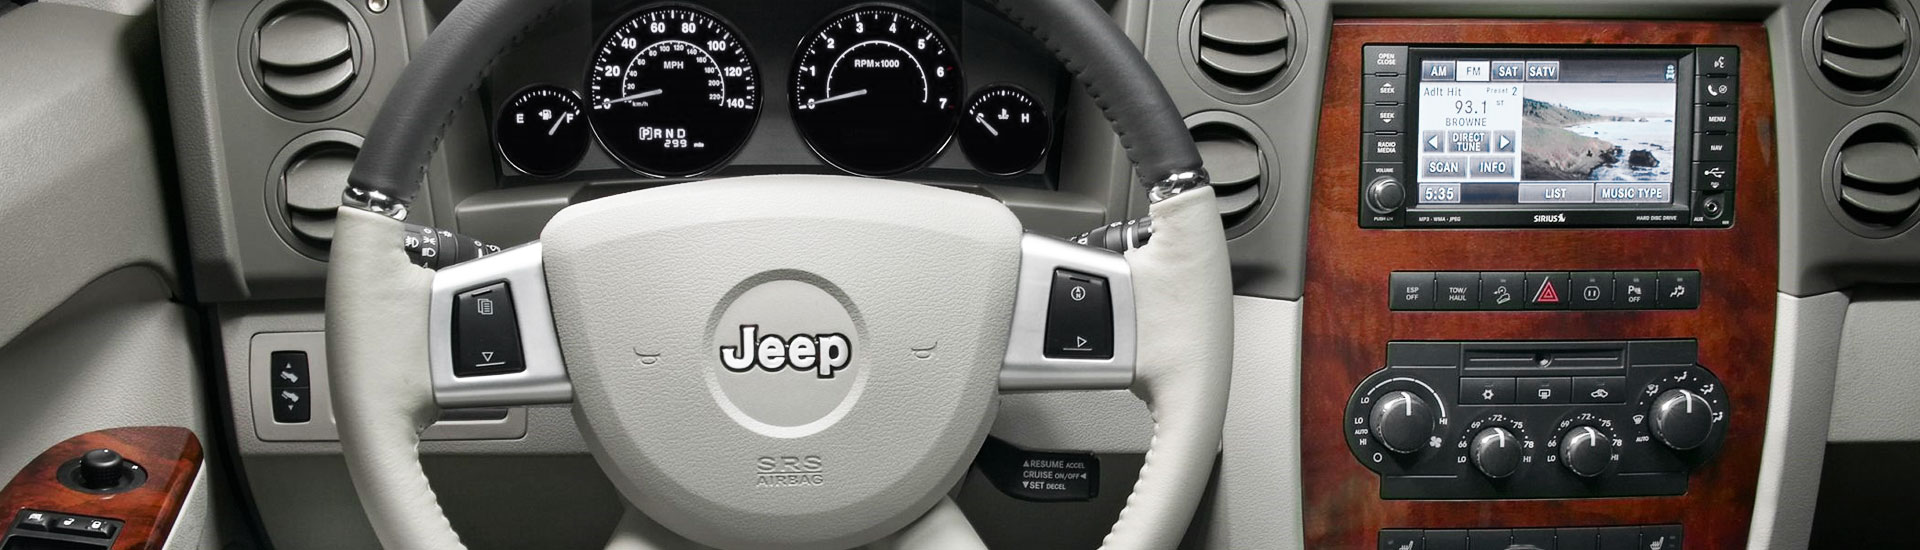 2018 Jeep Renegade Custom Dash Kits